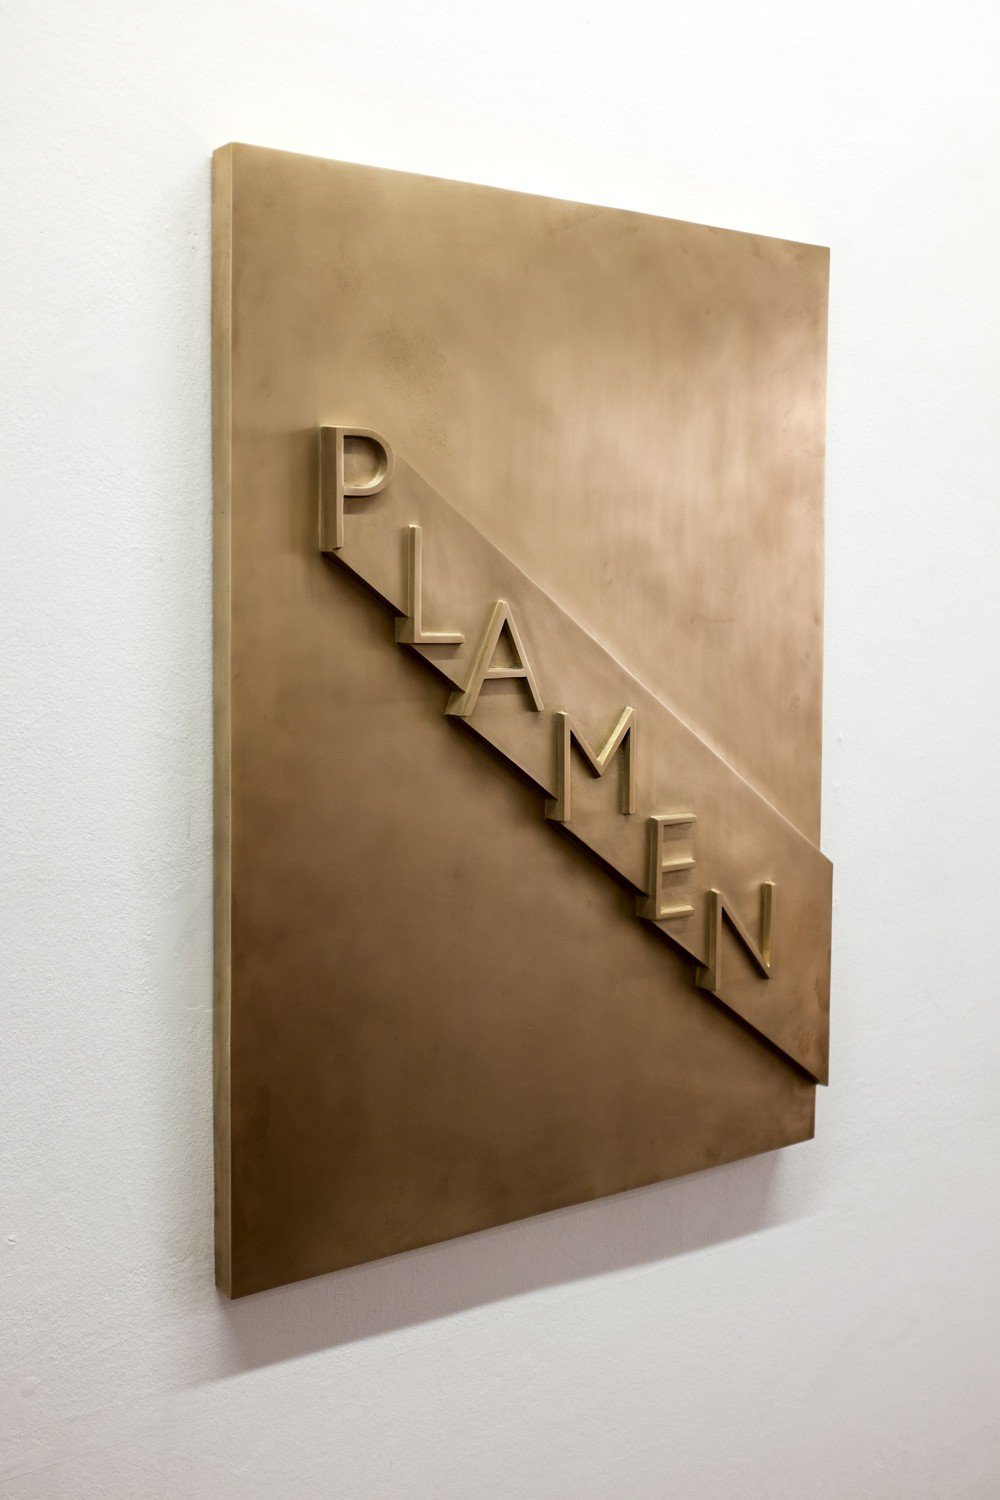 Plamen DejanoffPlamen, 2014Bronze cast110 x 78 x 8 cm